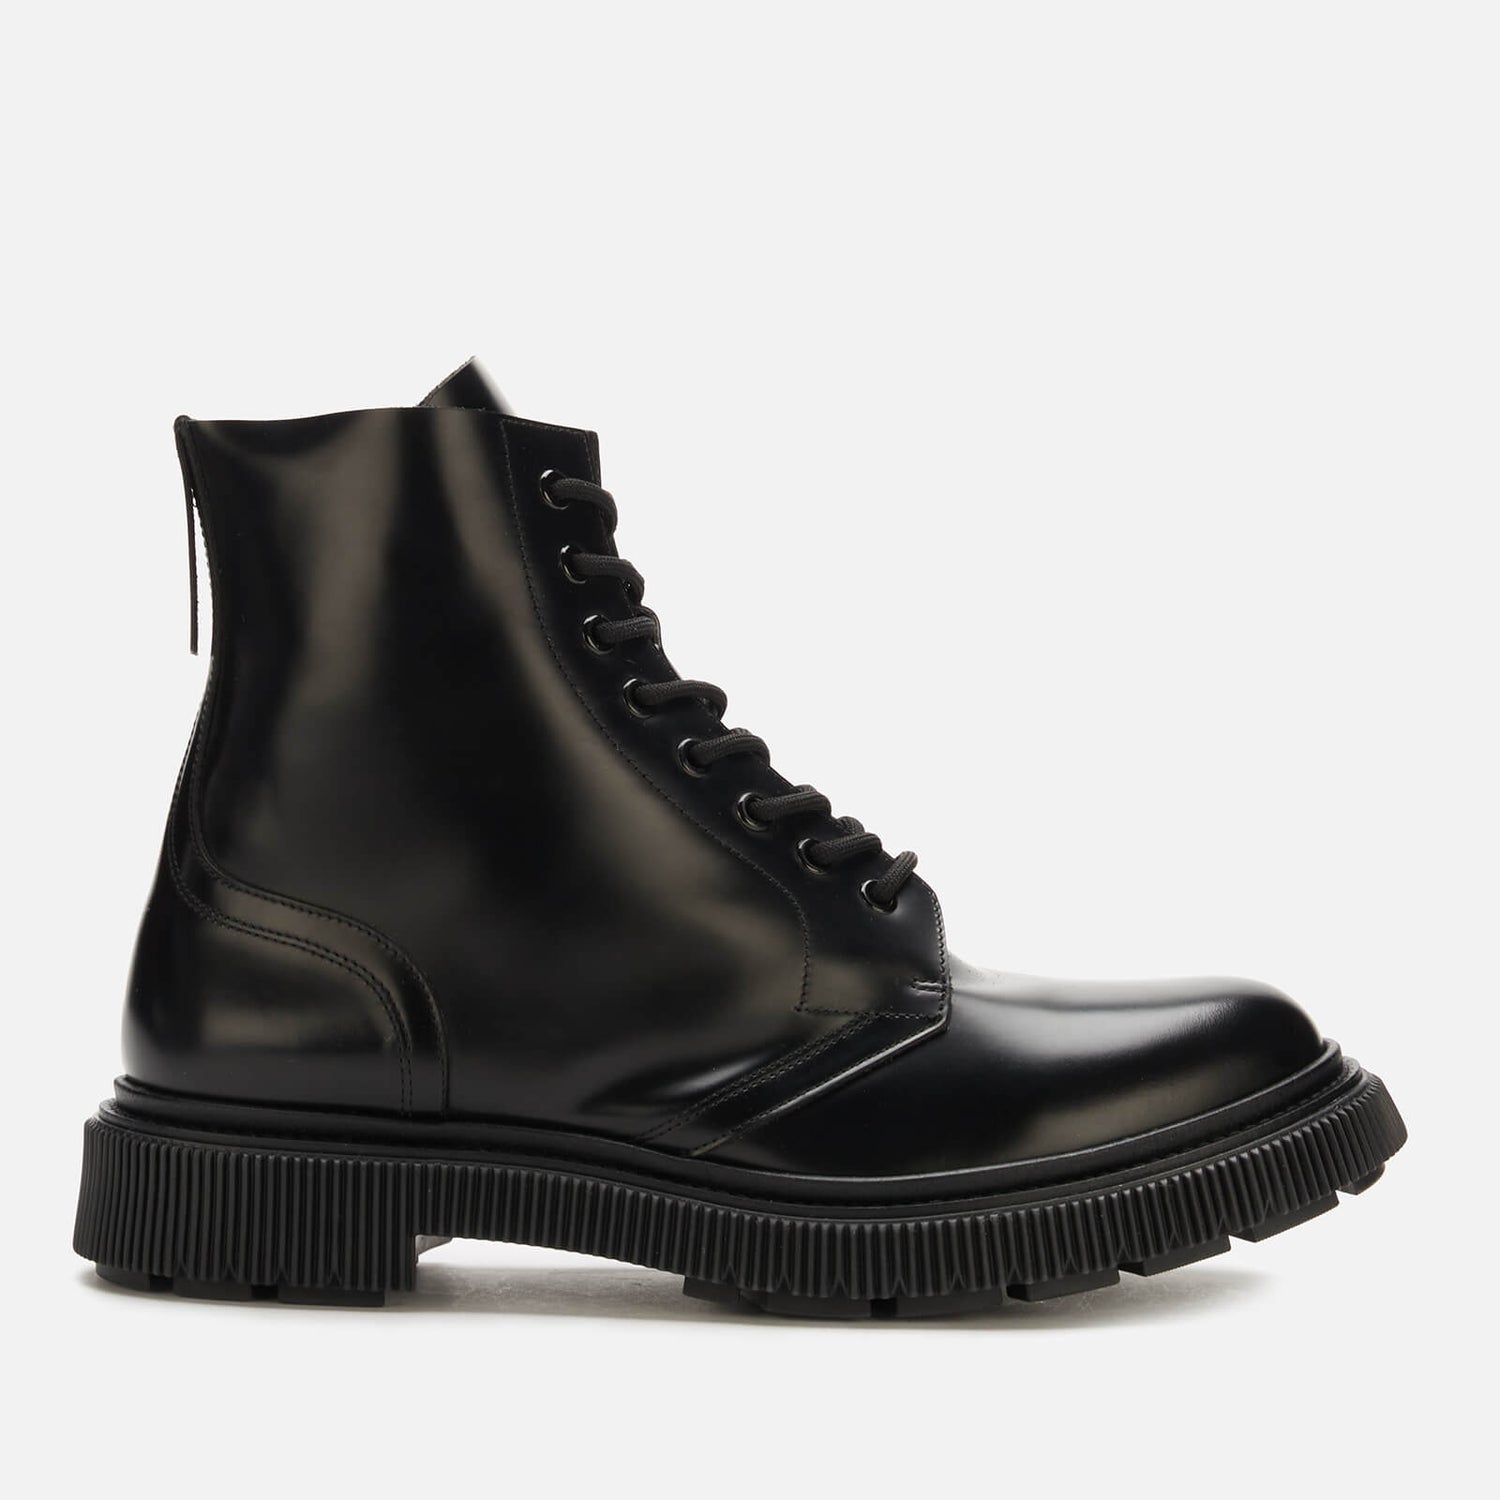 Adieu Men's Type 165 Leather Lace Up Boots - Black - UK 7